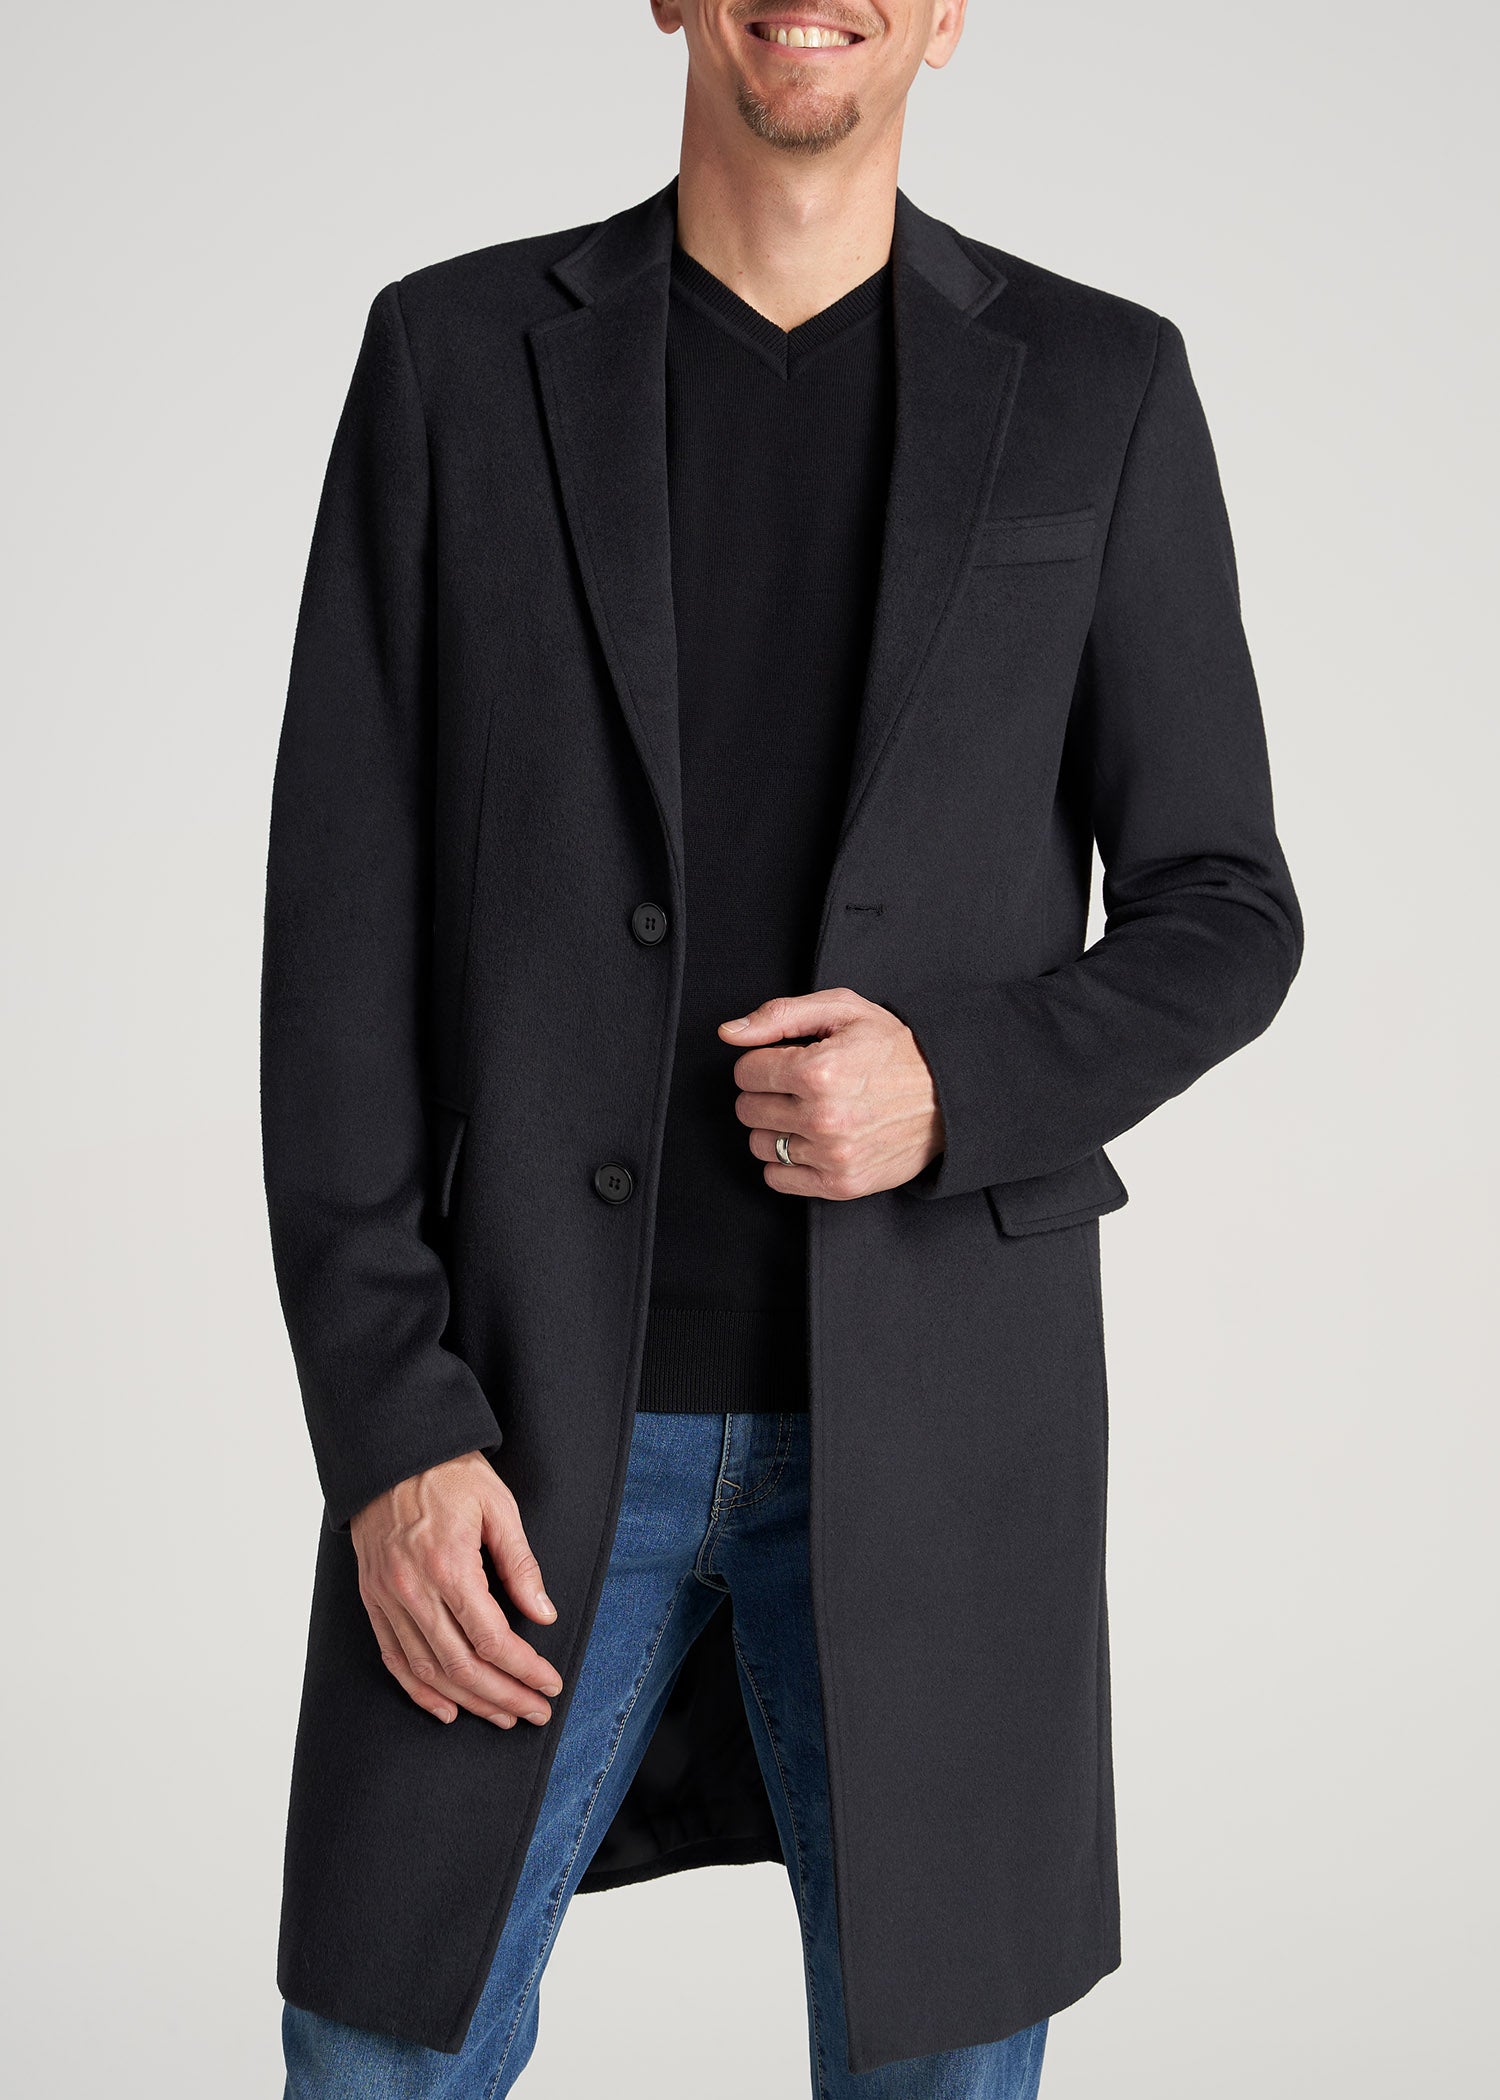 Wool Coat for Tall Men